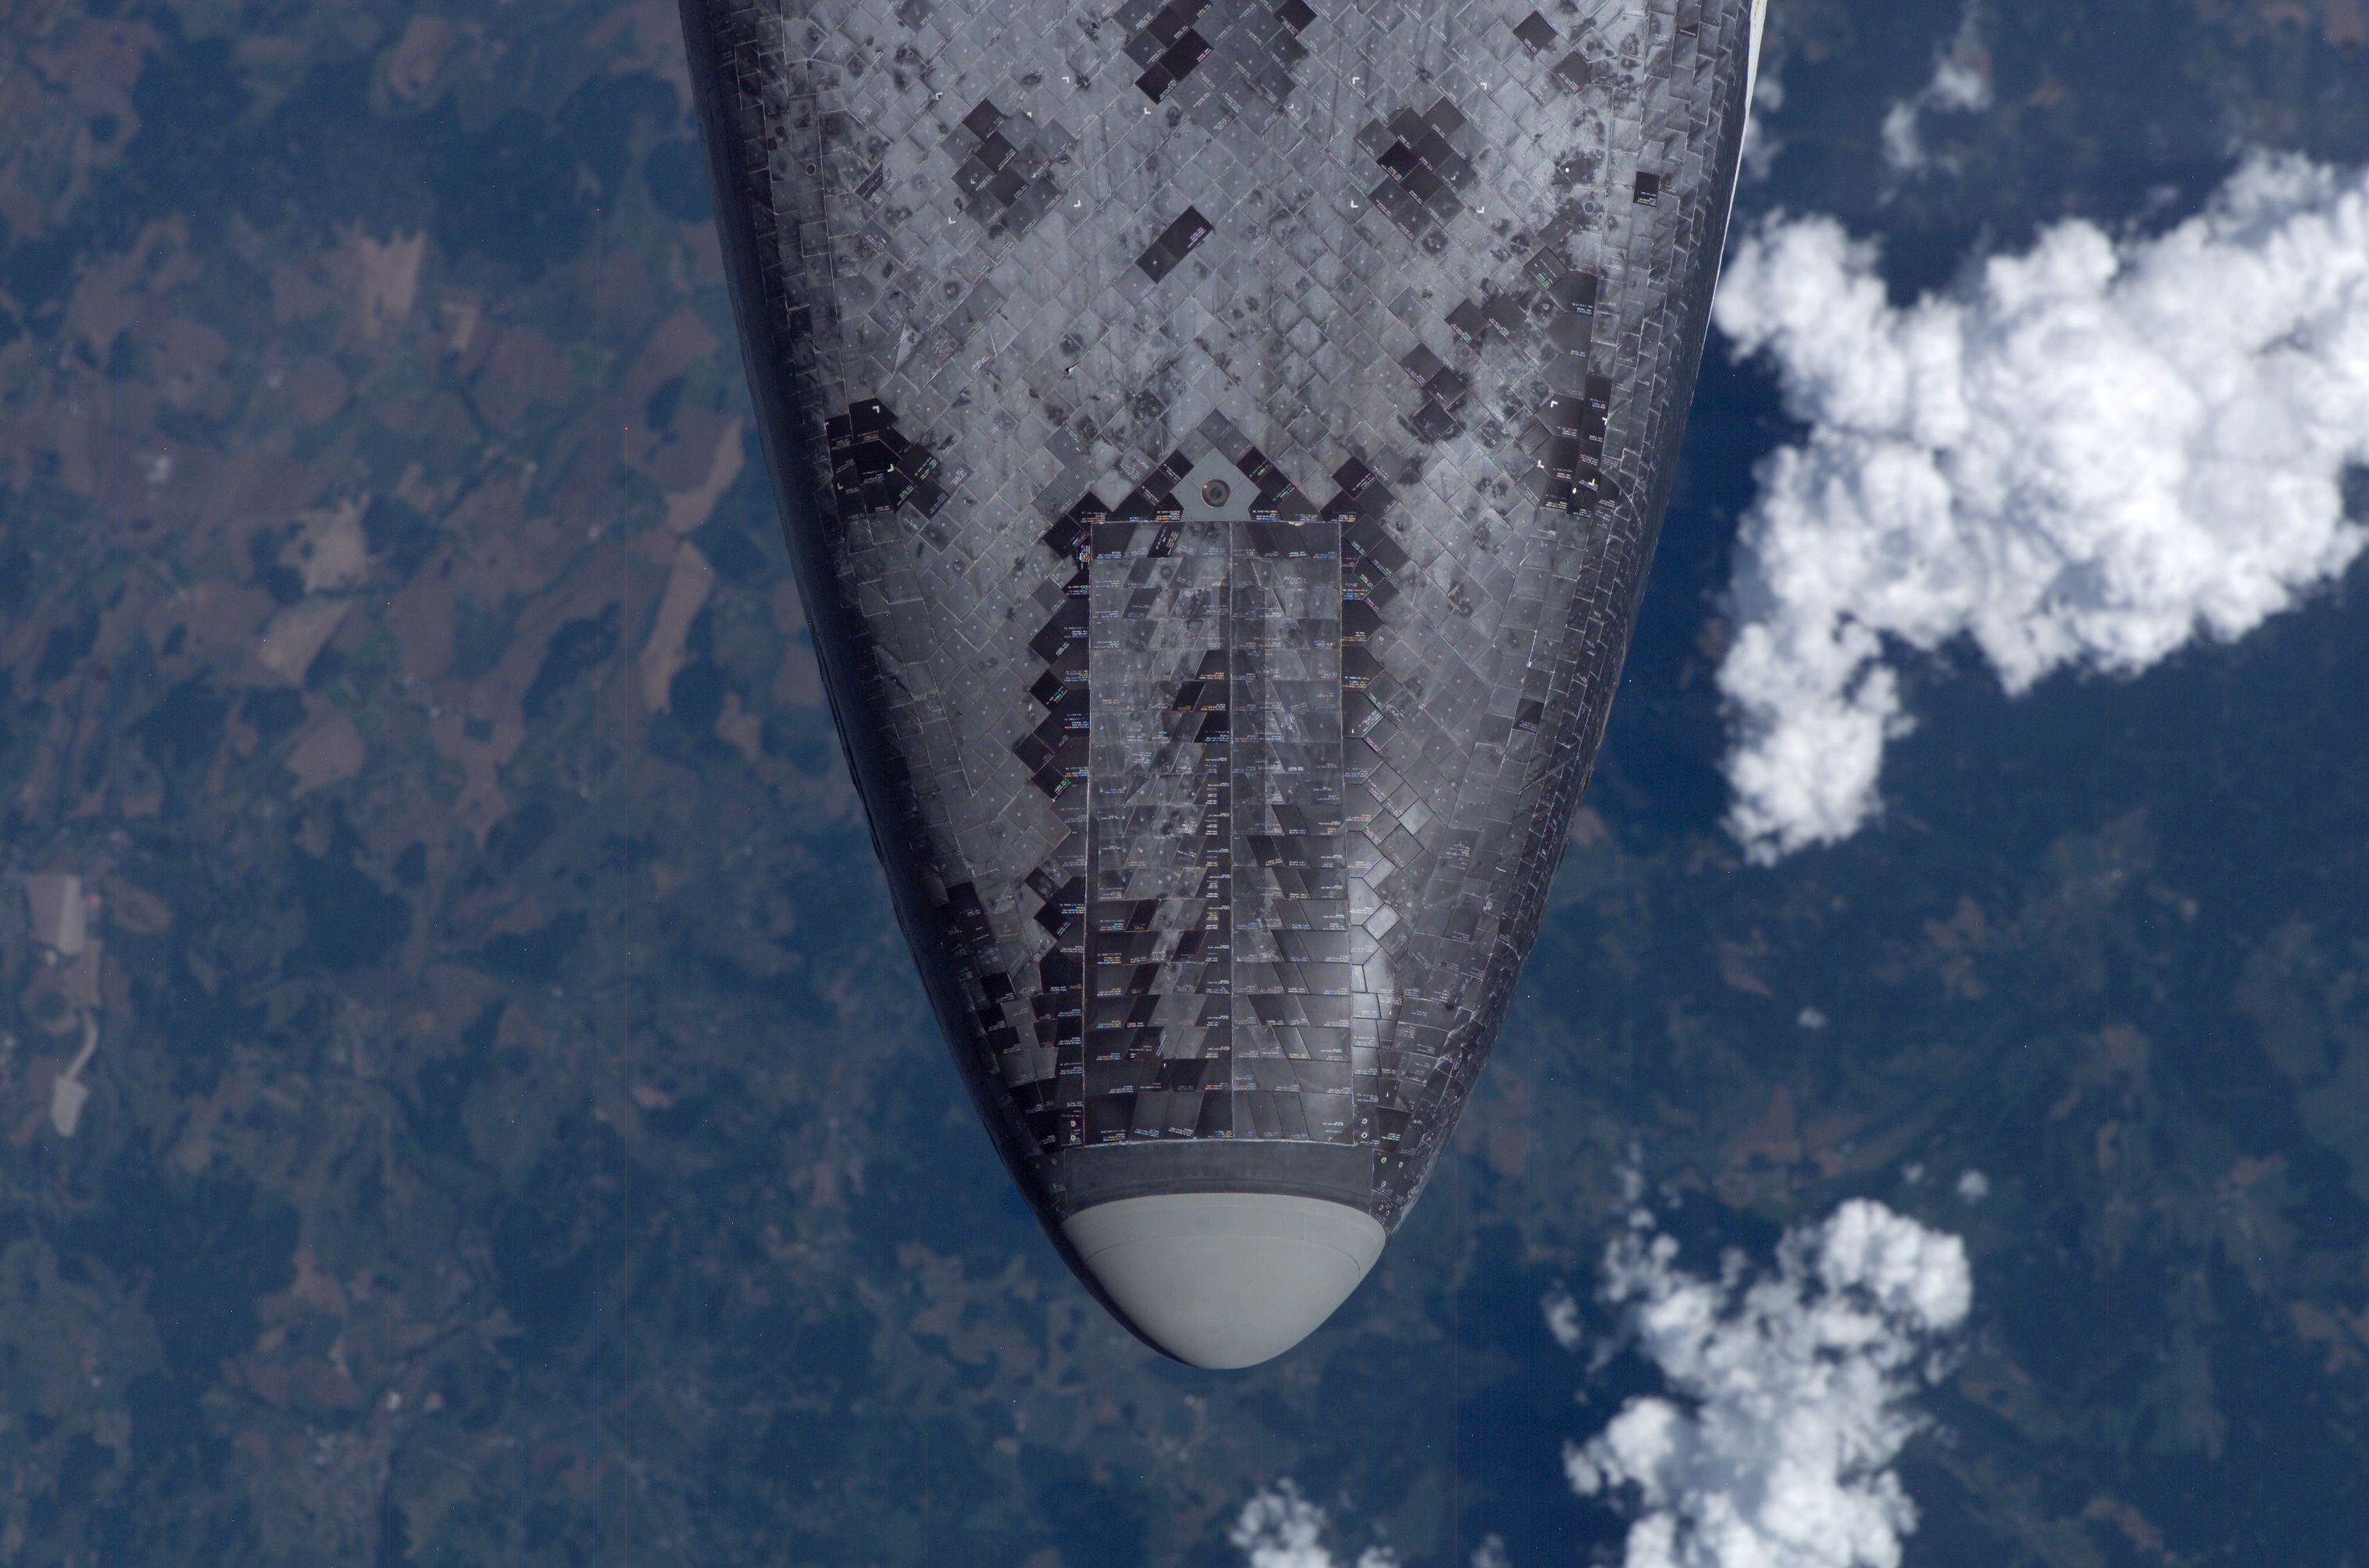 Escudo cermico del transbordador Discovery. NASA